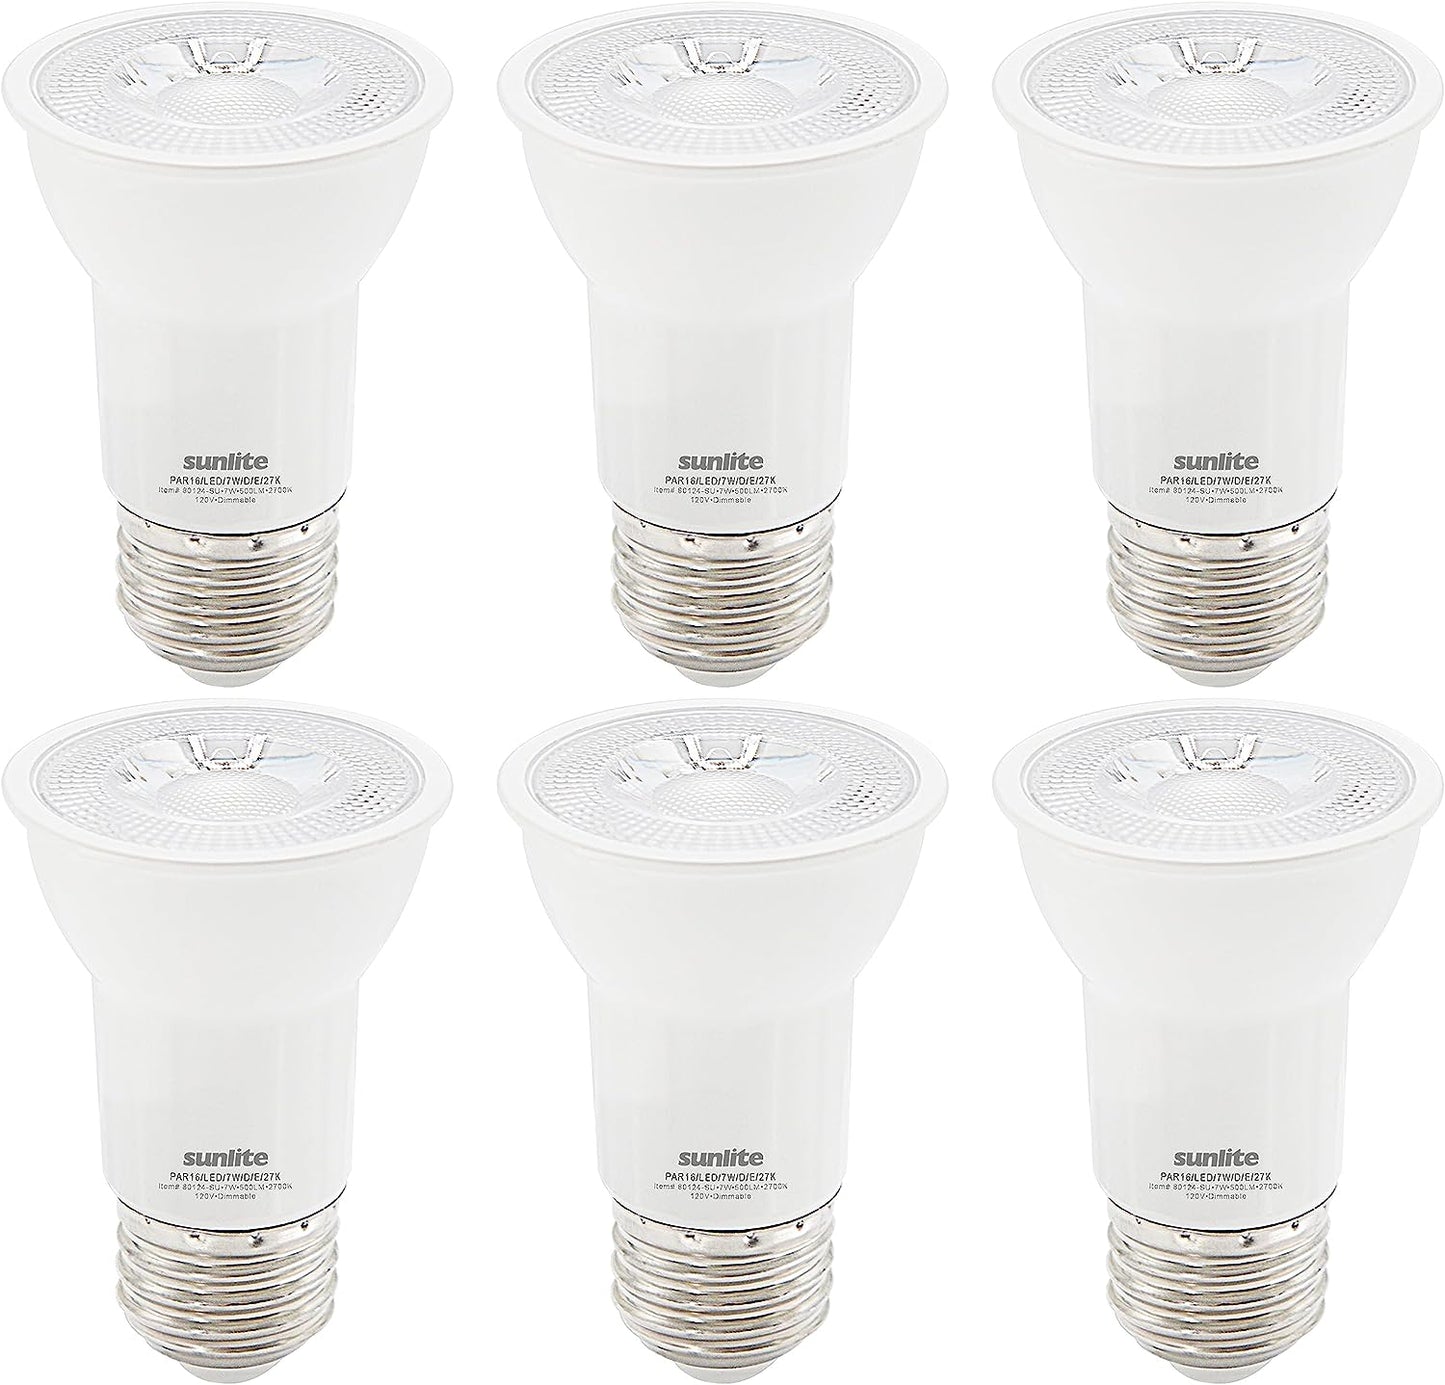 Sunlite 40385 LED PAR16 Long Neck Recessed Spotlight Bulb, 7 Watt, (75W Halogen Replacement), 500 Lumens, Medium (E26) Base, Dimmable, ETL Listed, 2700K Warm White, 6 Pack